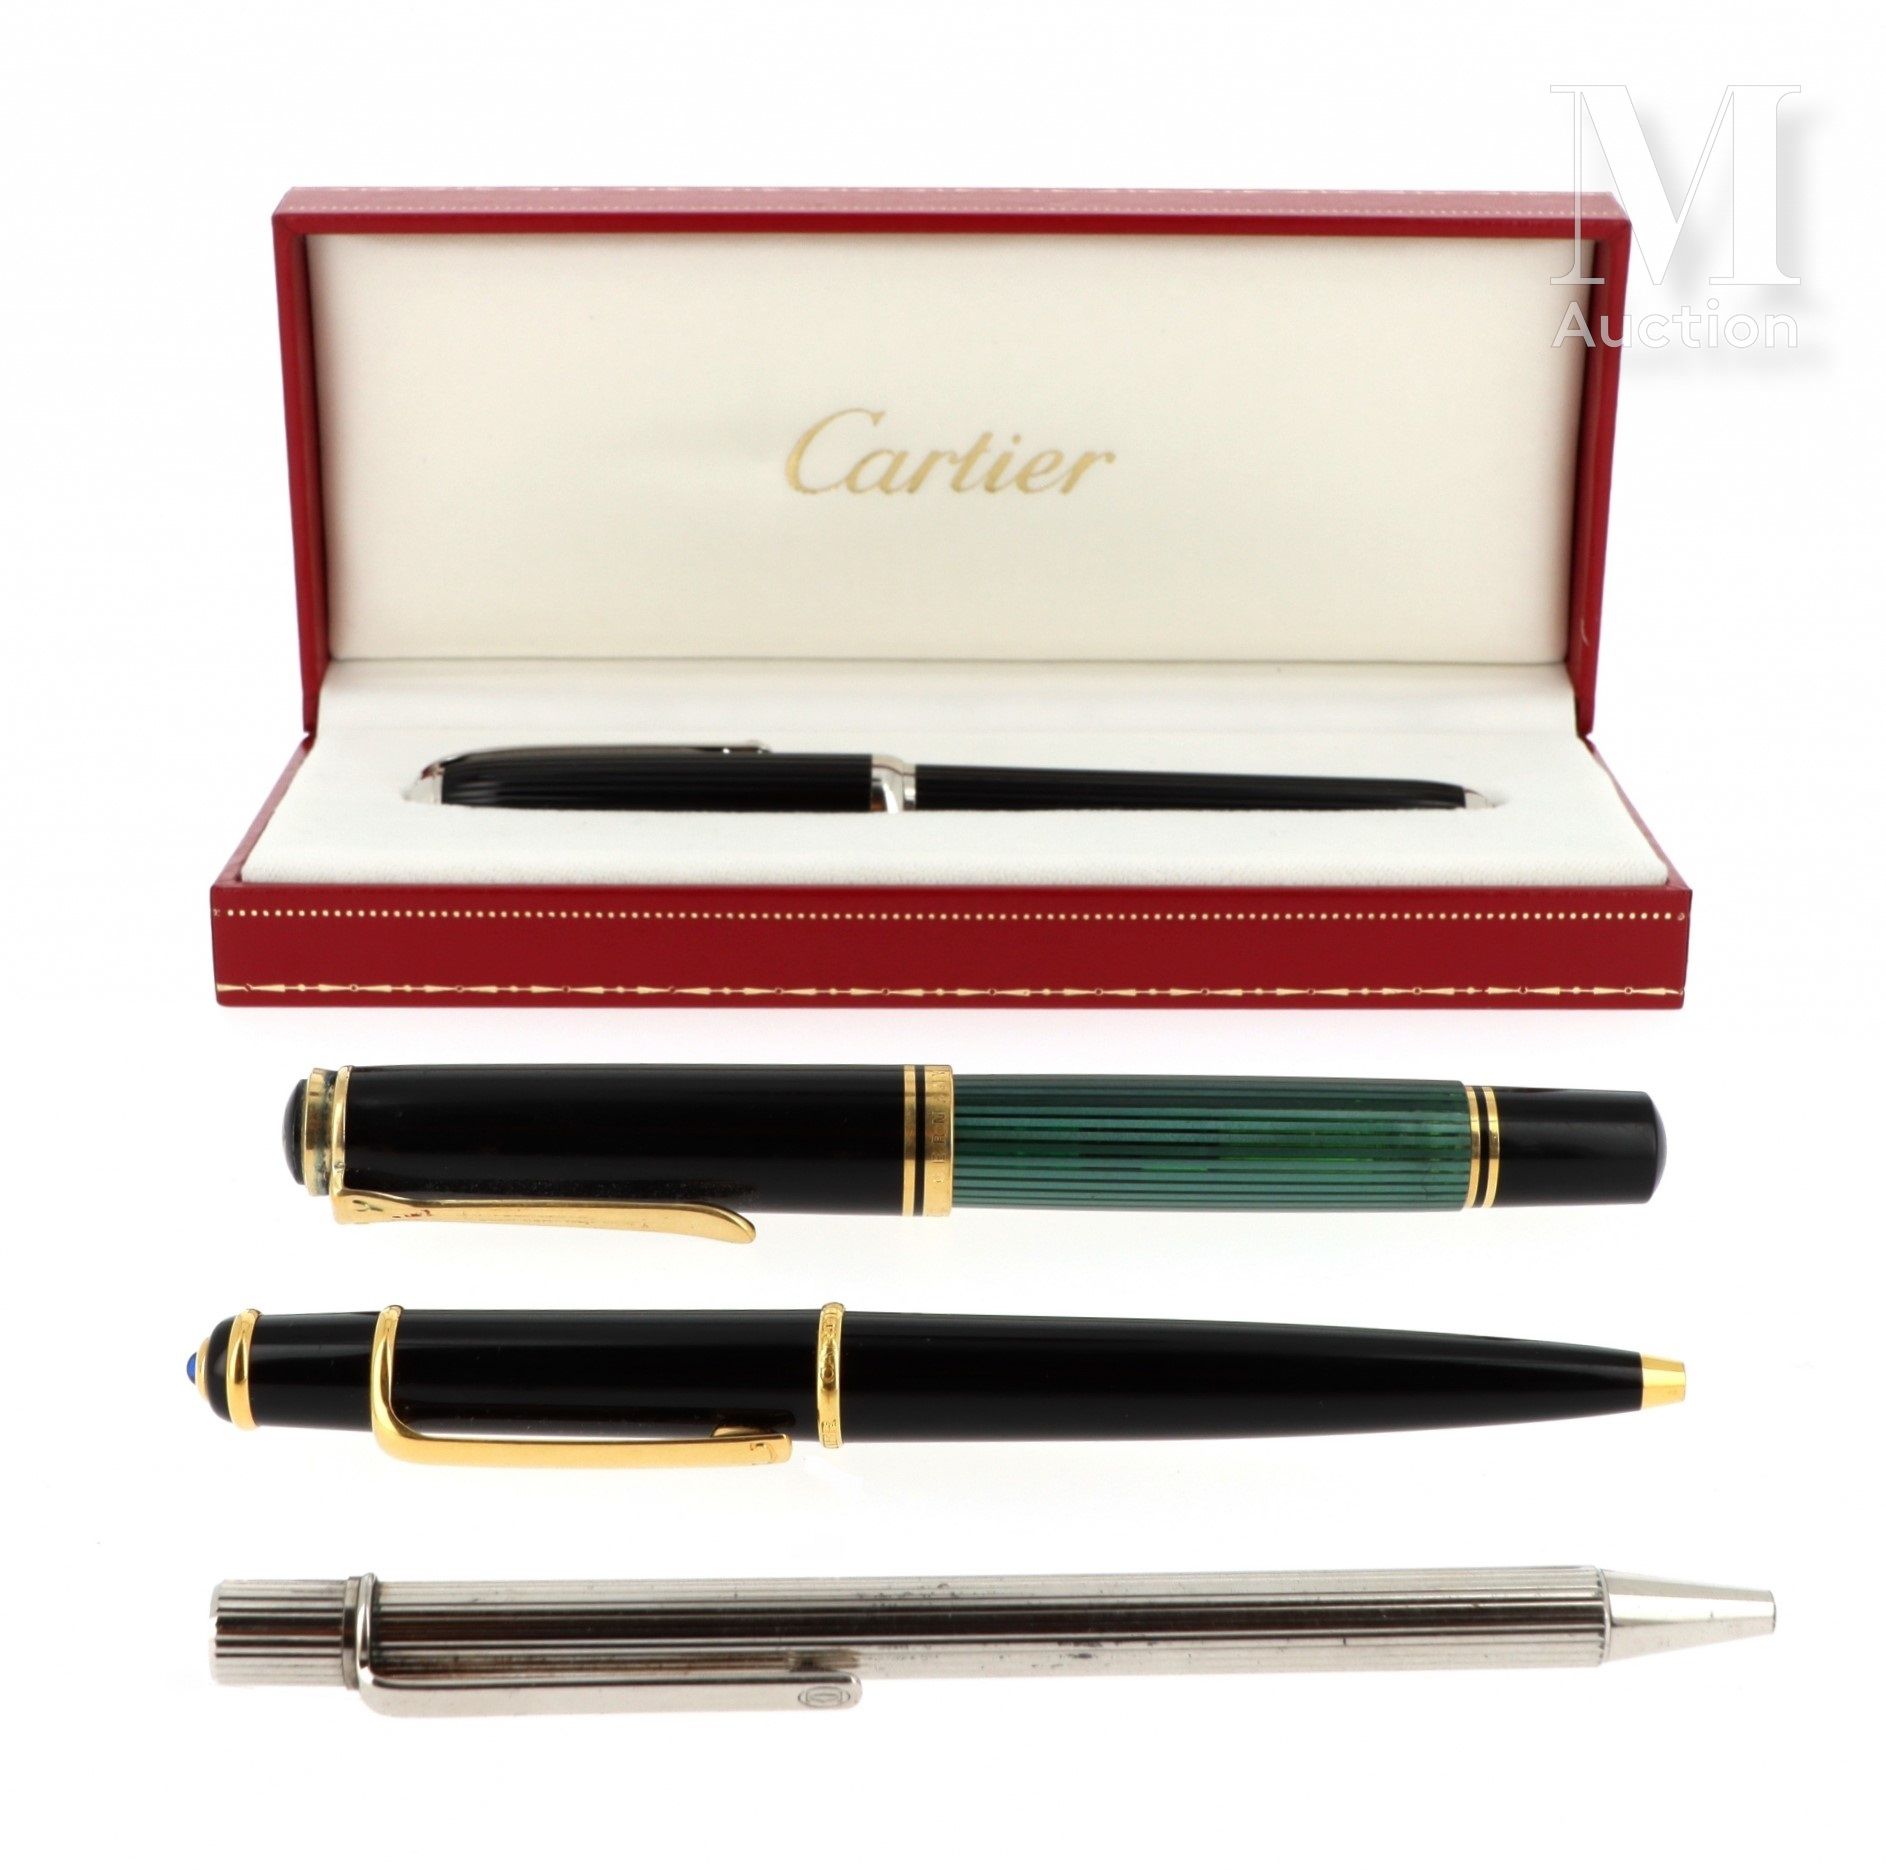 LOT DE STYLOS DIVERS Lot of various pens including :

- CARTIER, a silver plated&hellip;